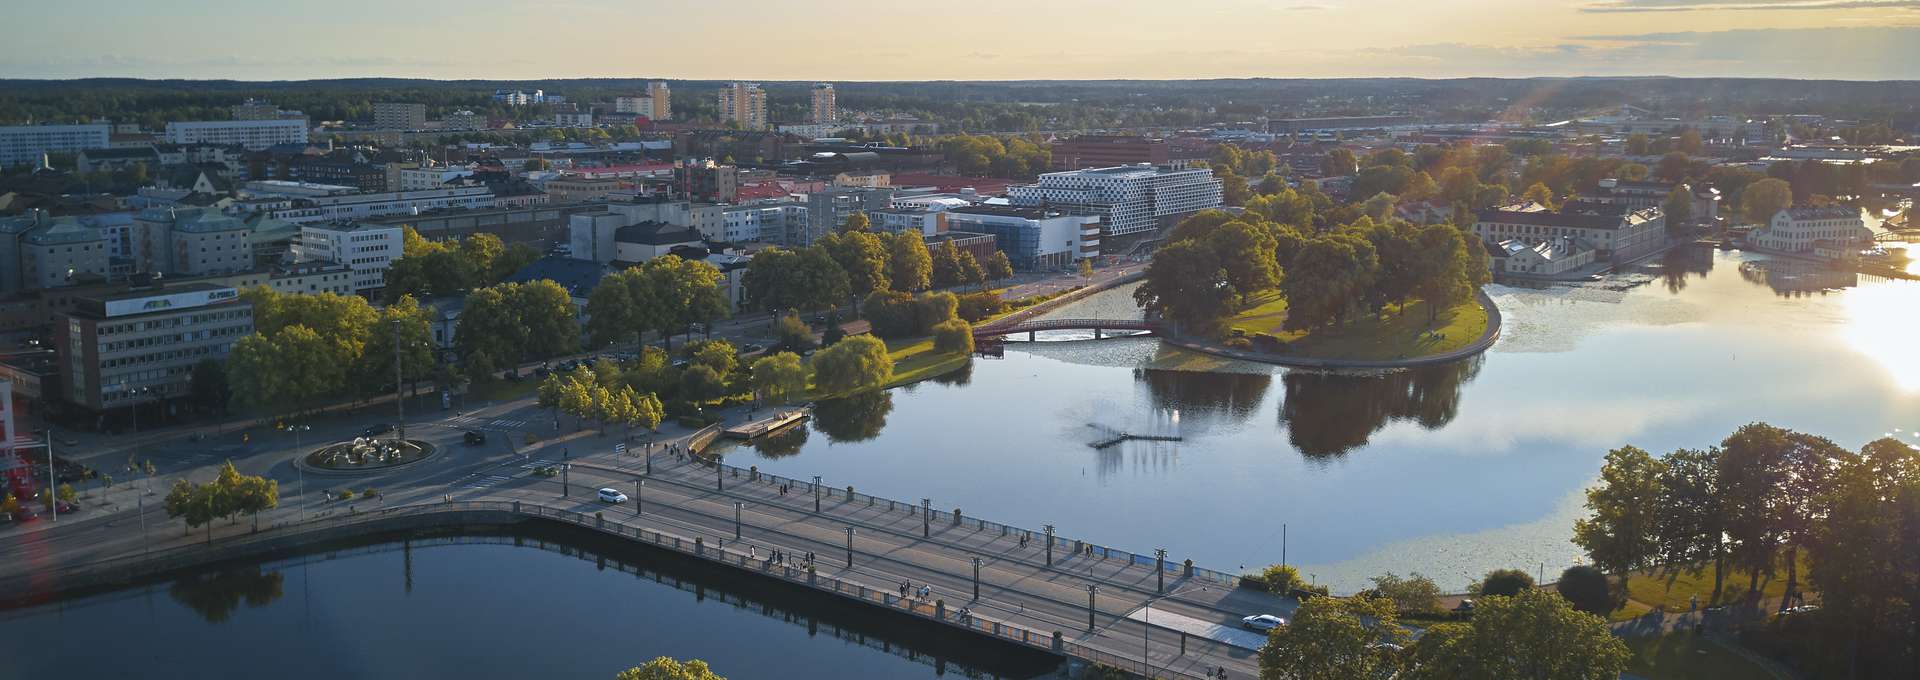 Drönarbild över Eskilstuna med Nybron i fokus